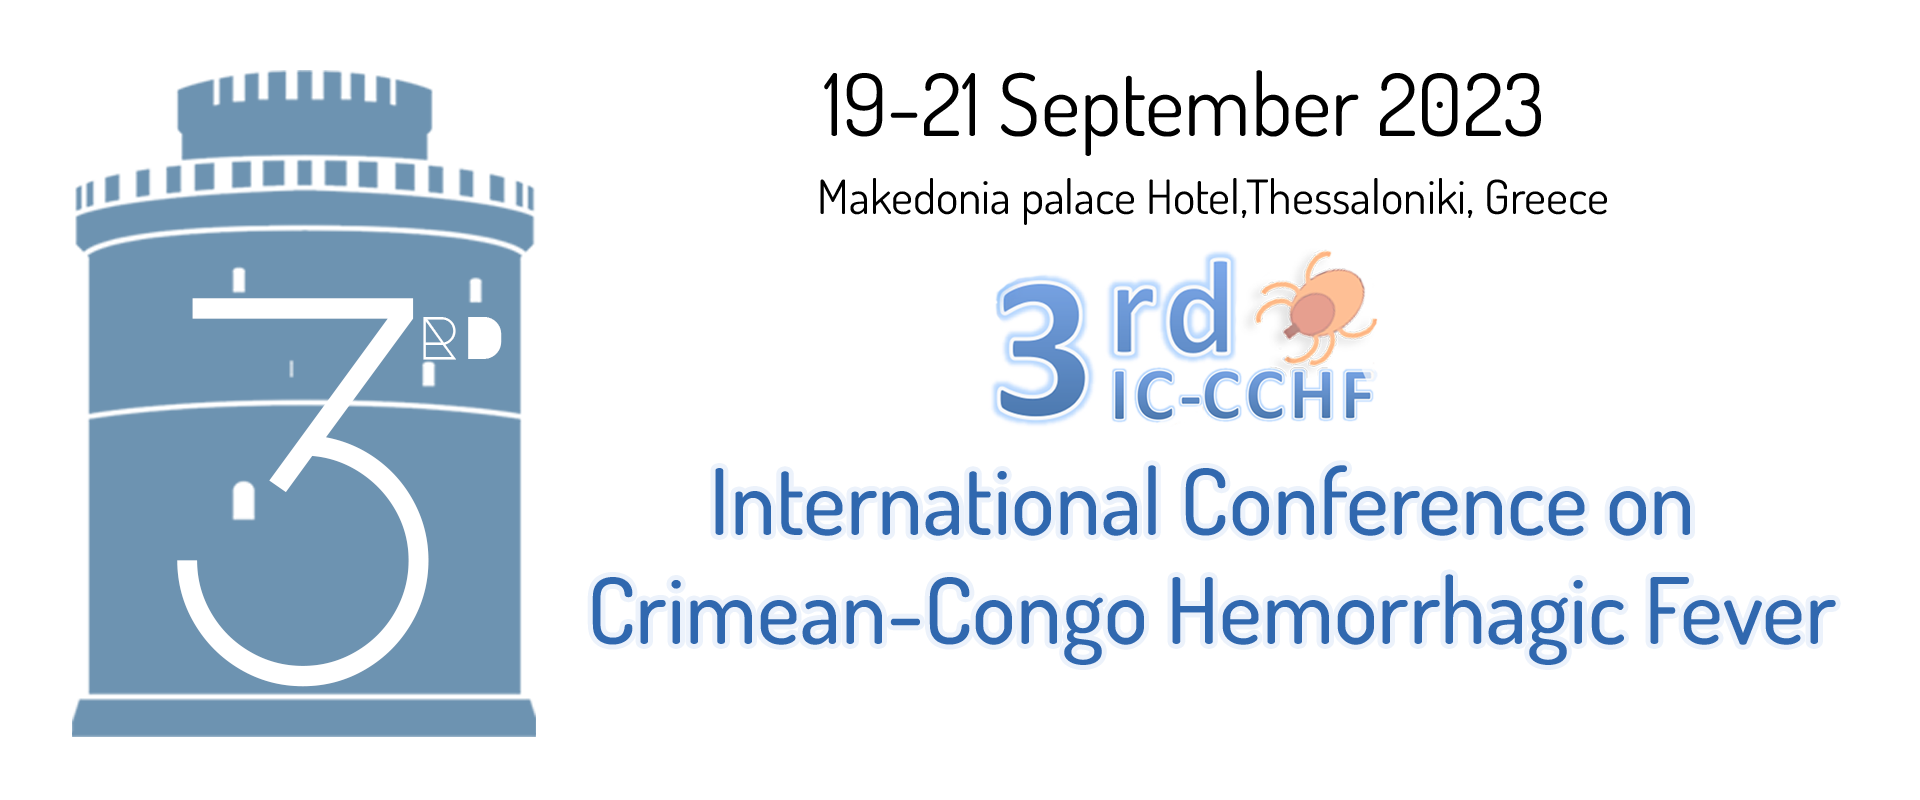 3rd International Conference on Crimean-Congo Hemorrhagic Fever